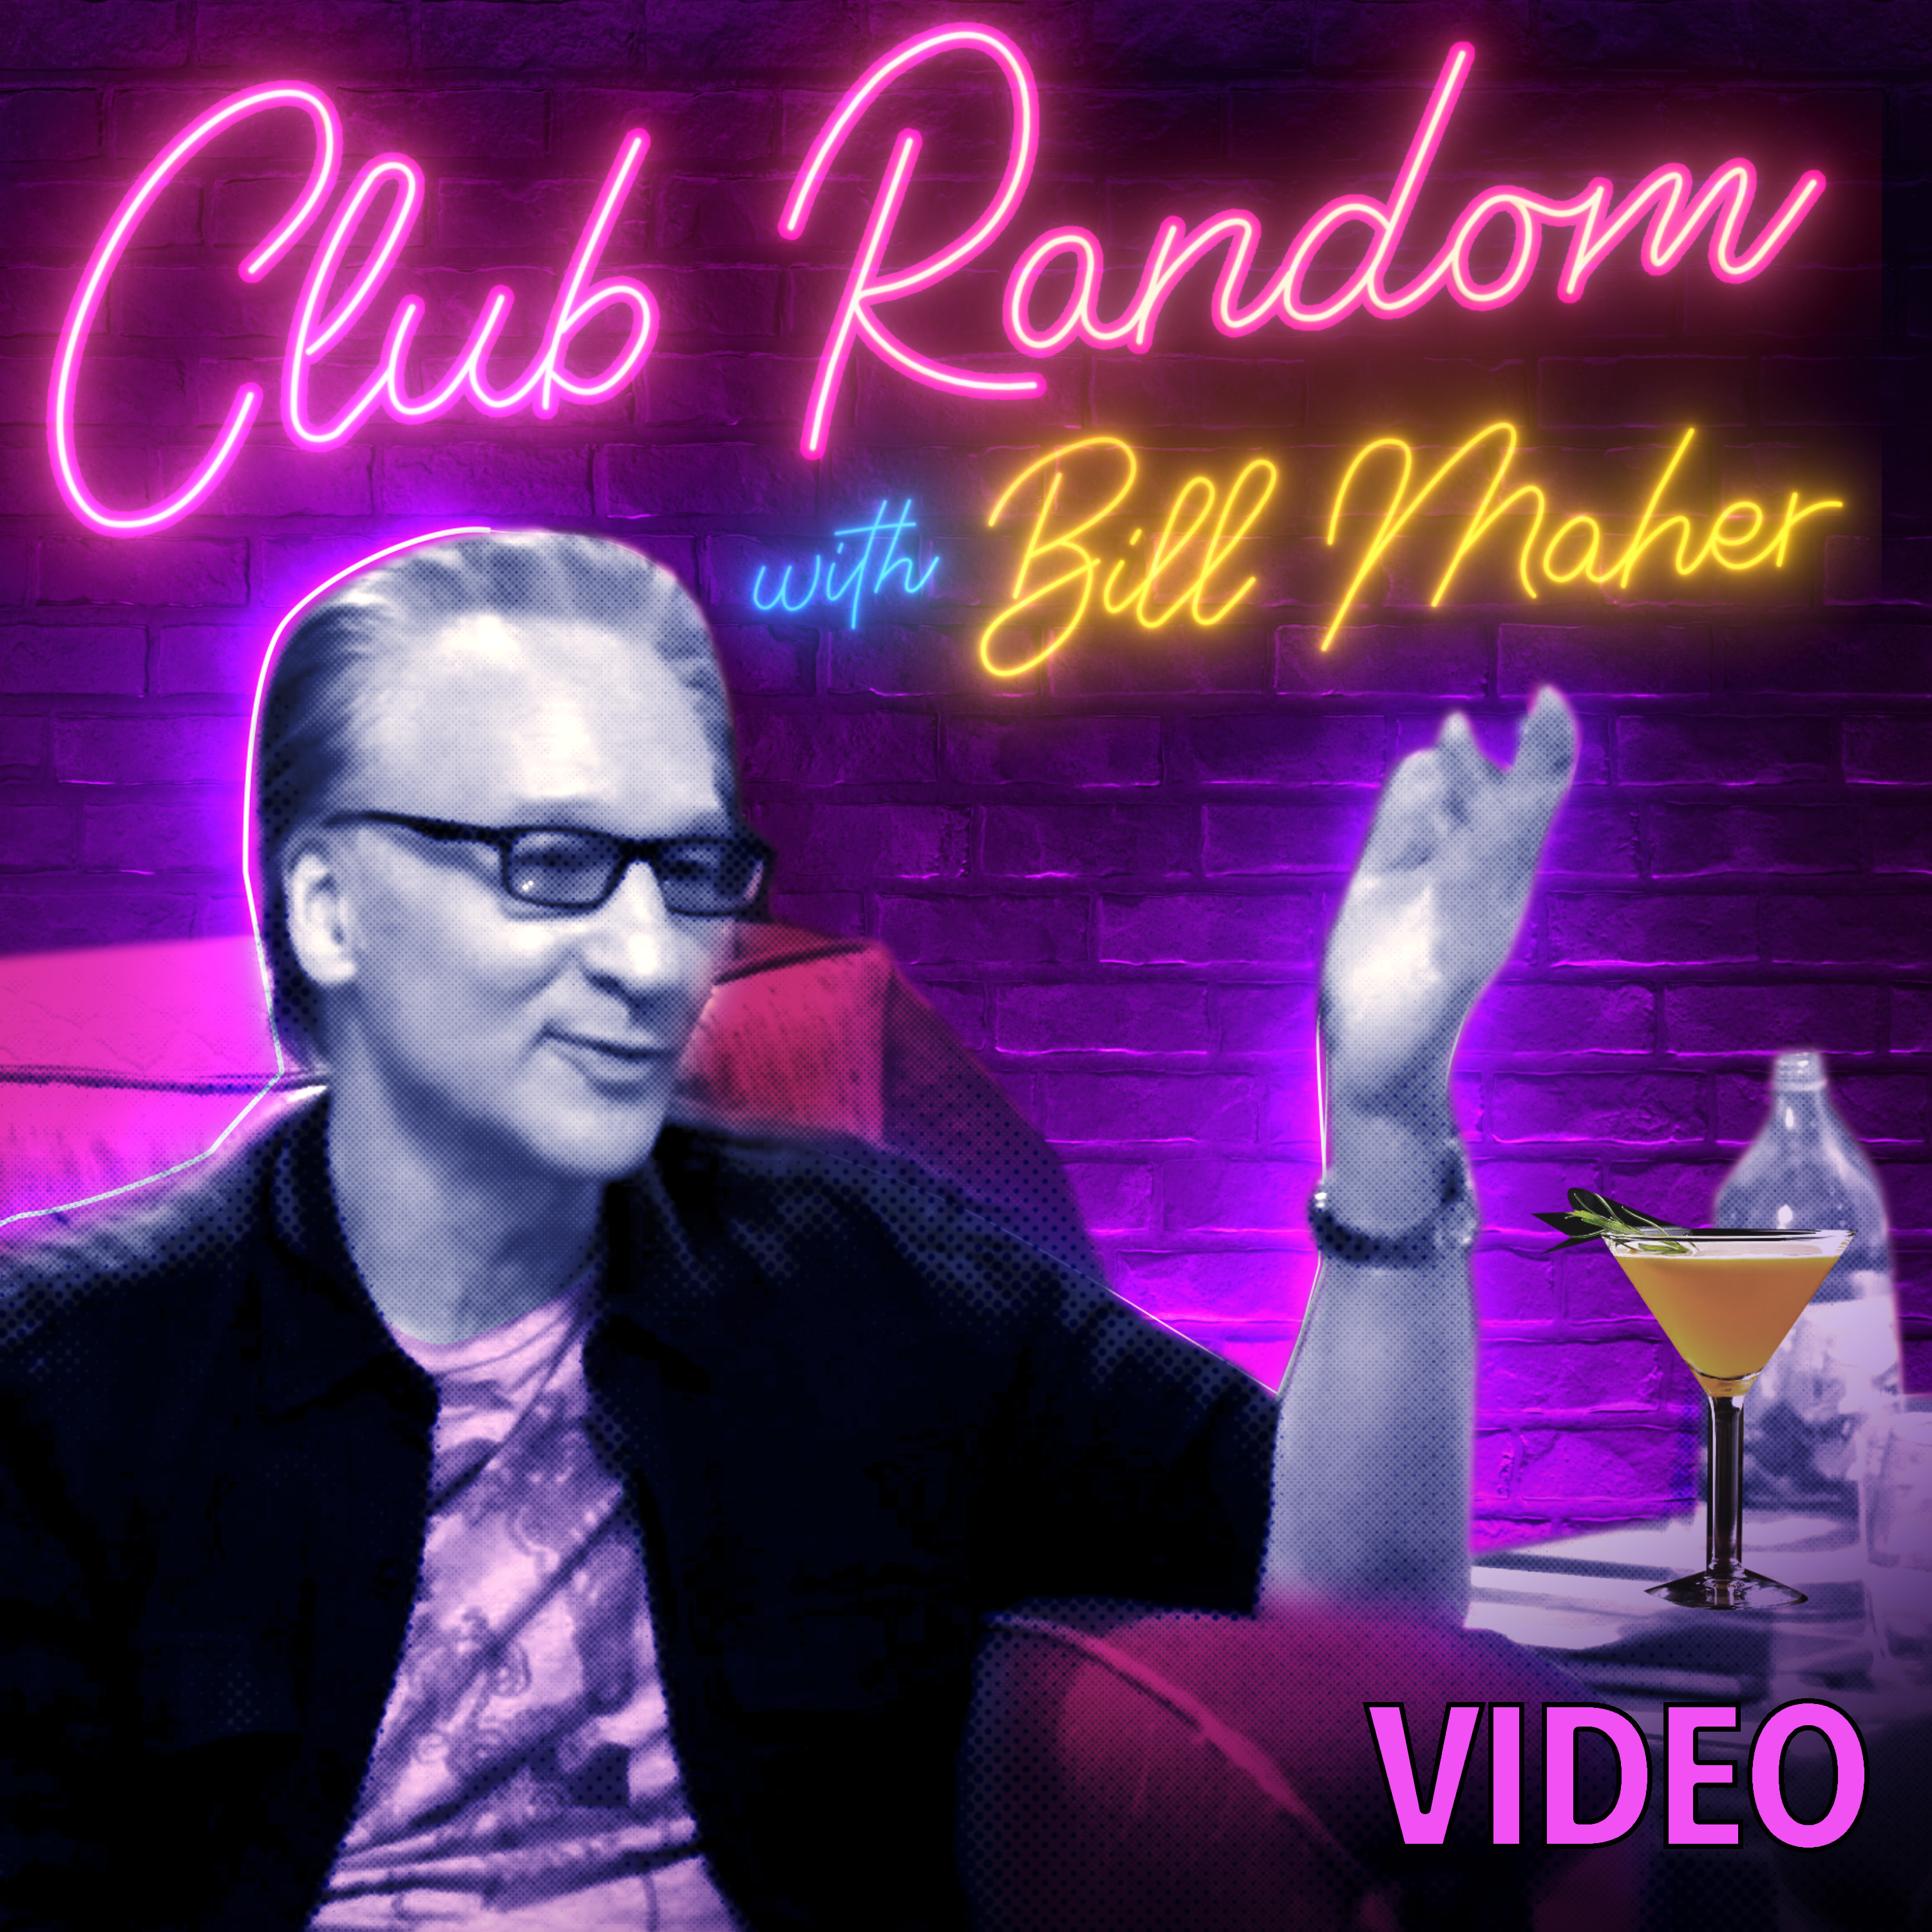 Video: Neil deGrasse Tyson | Club Random with Bill Maher